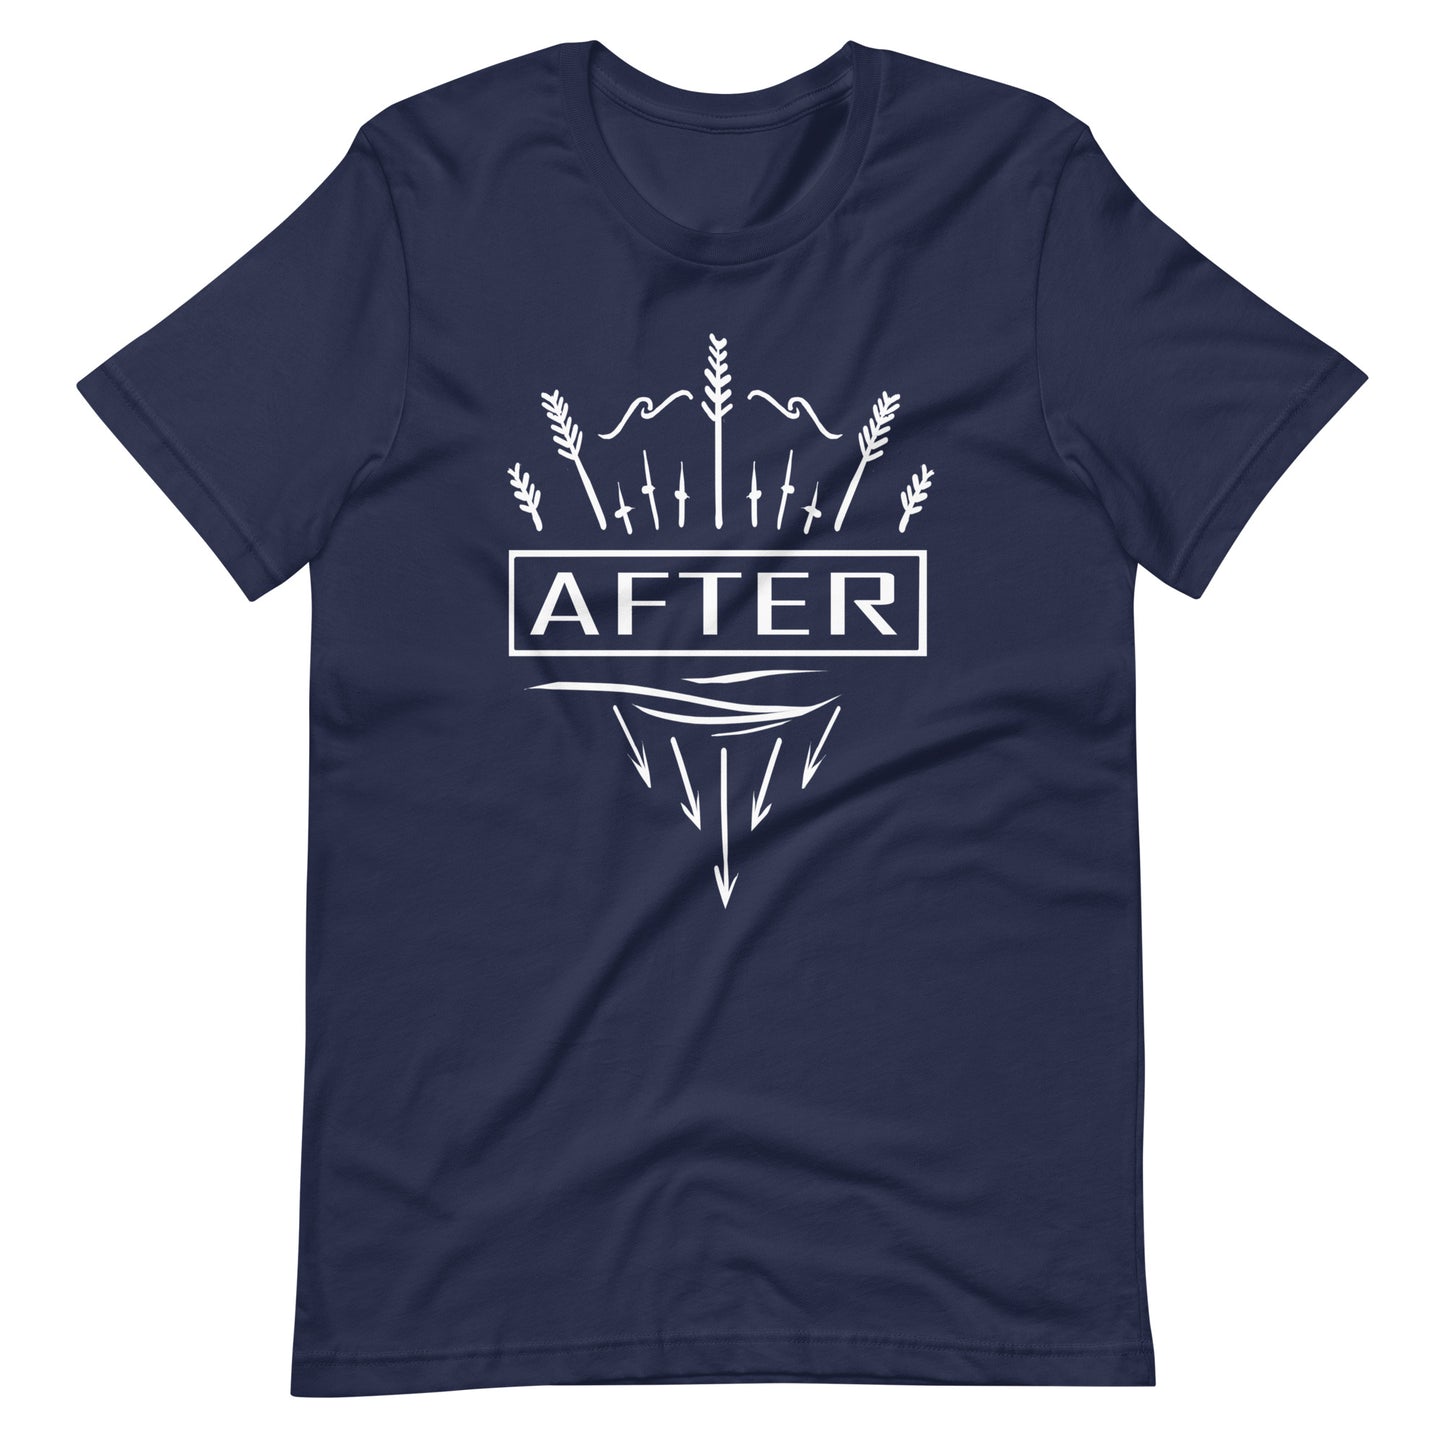 After - Men's t-shirt - Navy Front